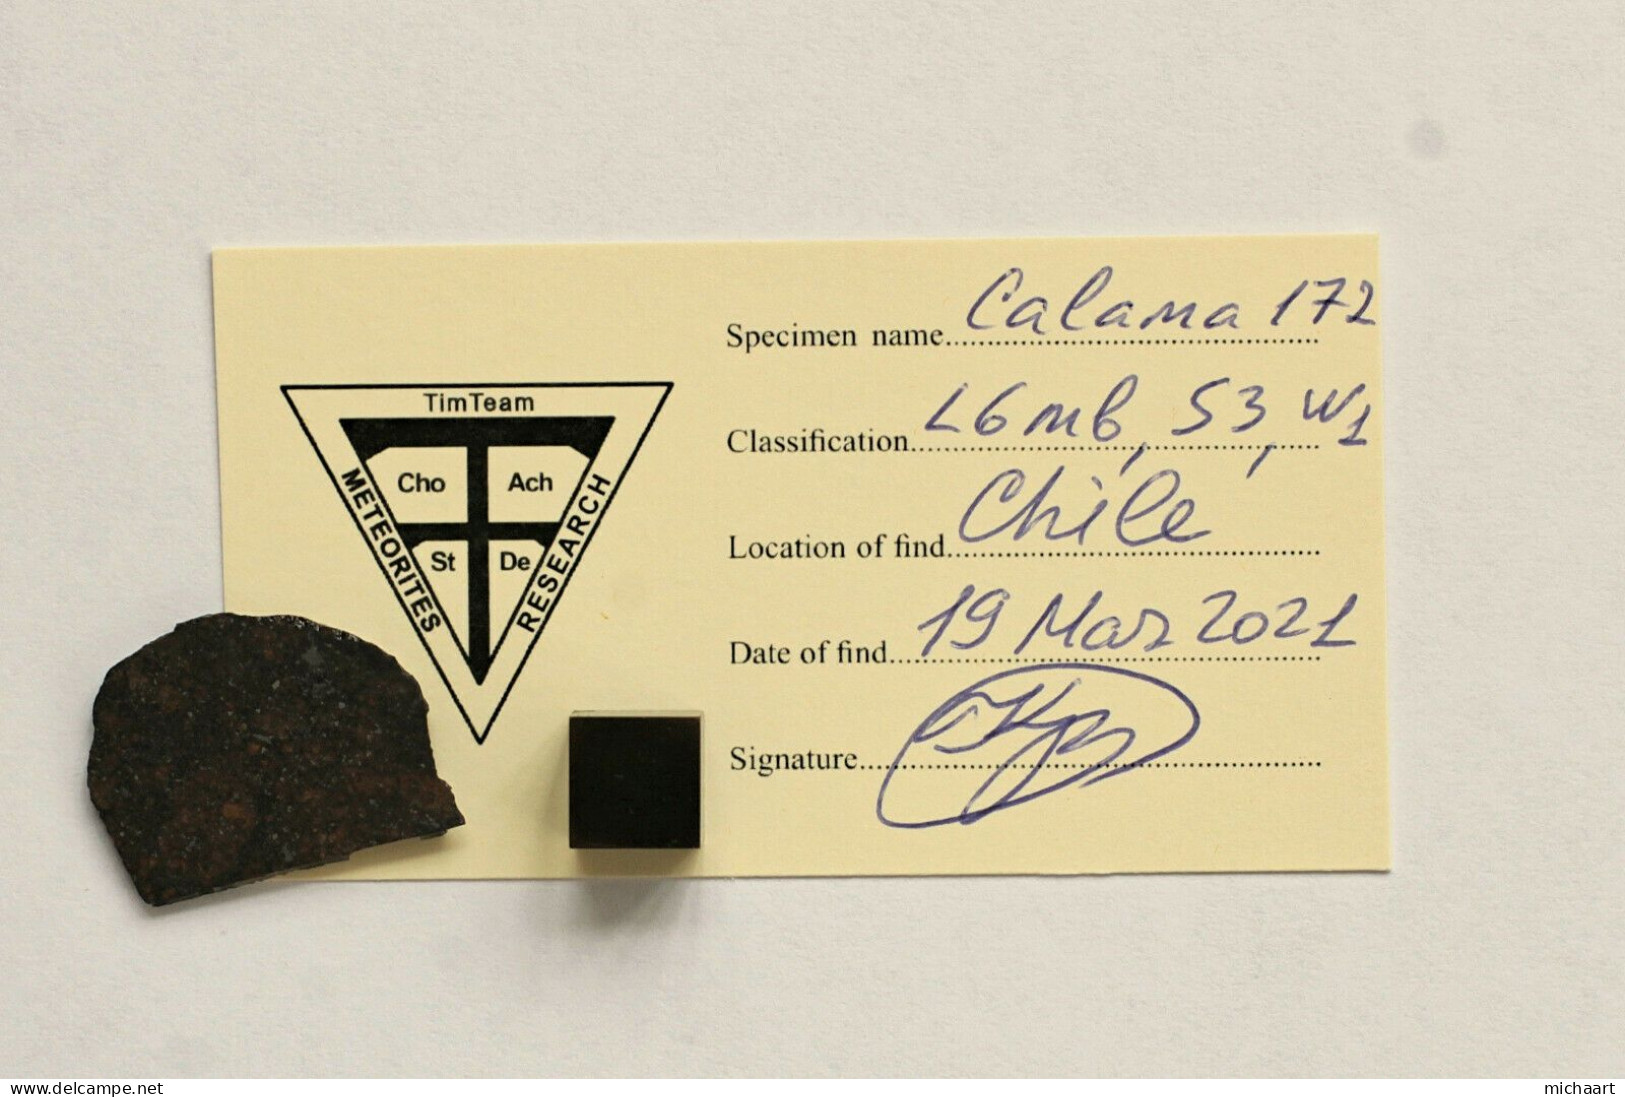 Meteorite Ordinary Chondrite Slice 3.31 G. Calama 172 (L6-mb,S3,W1) Chile 03086 - Meteorites